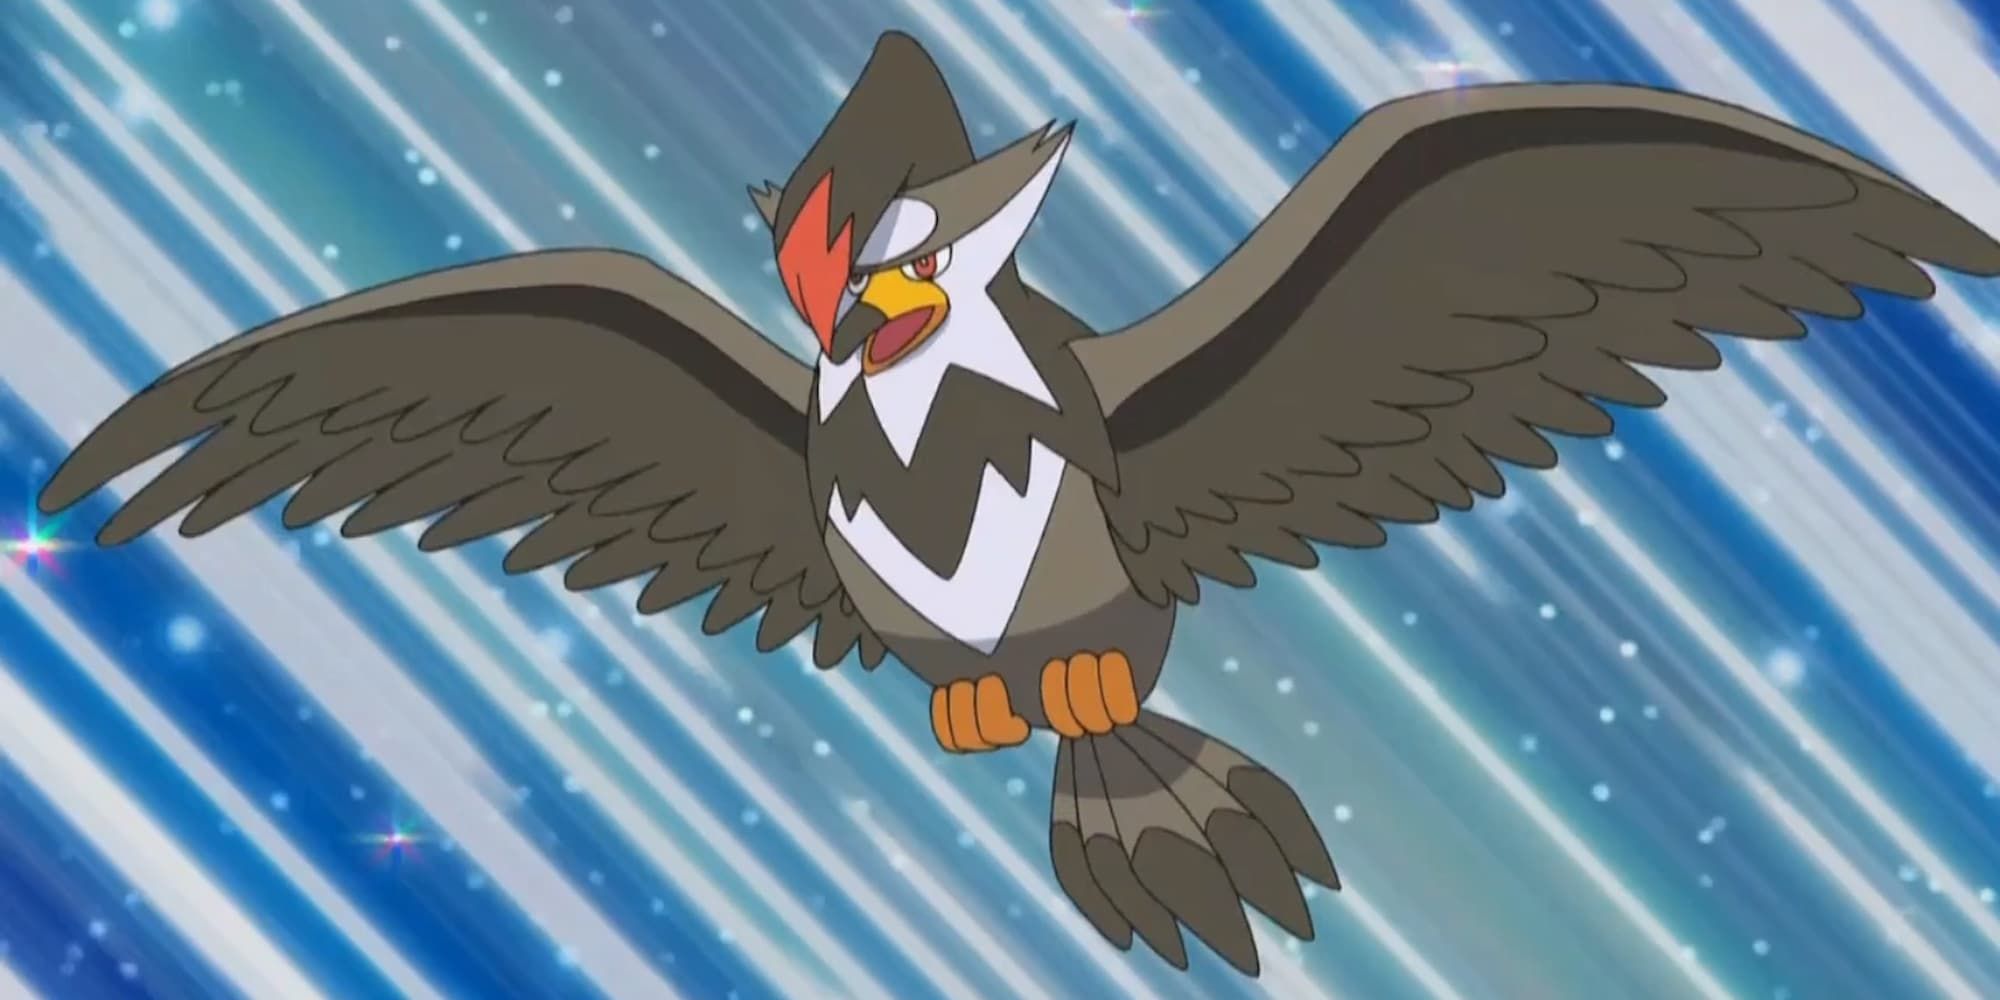 Ash's Staraptor from the Pokemon anime flies into battle.